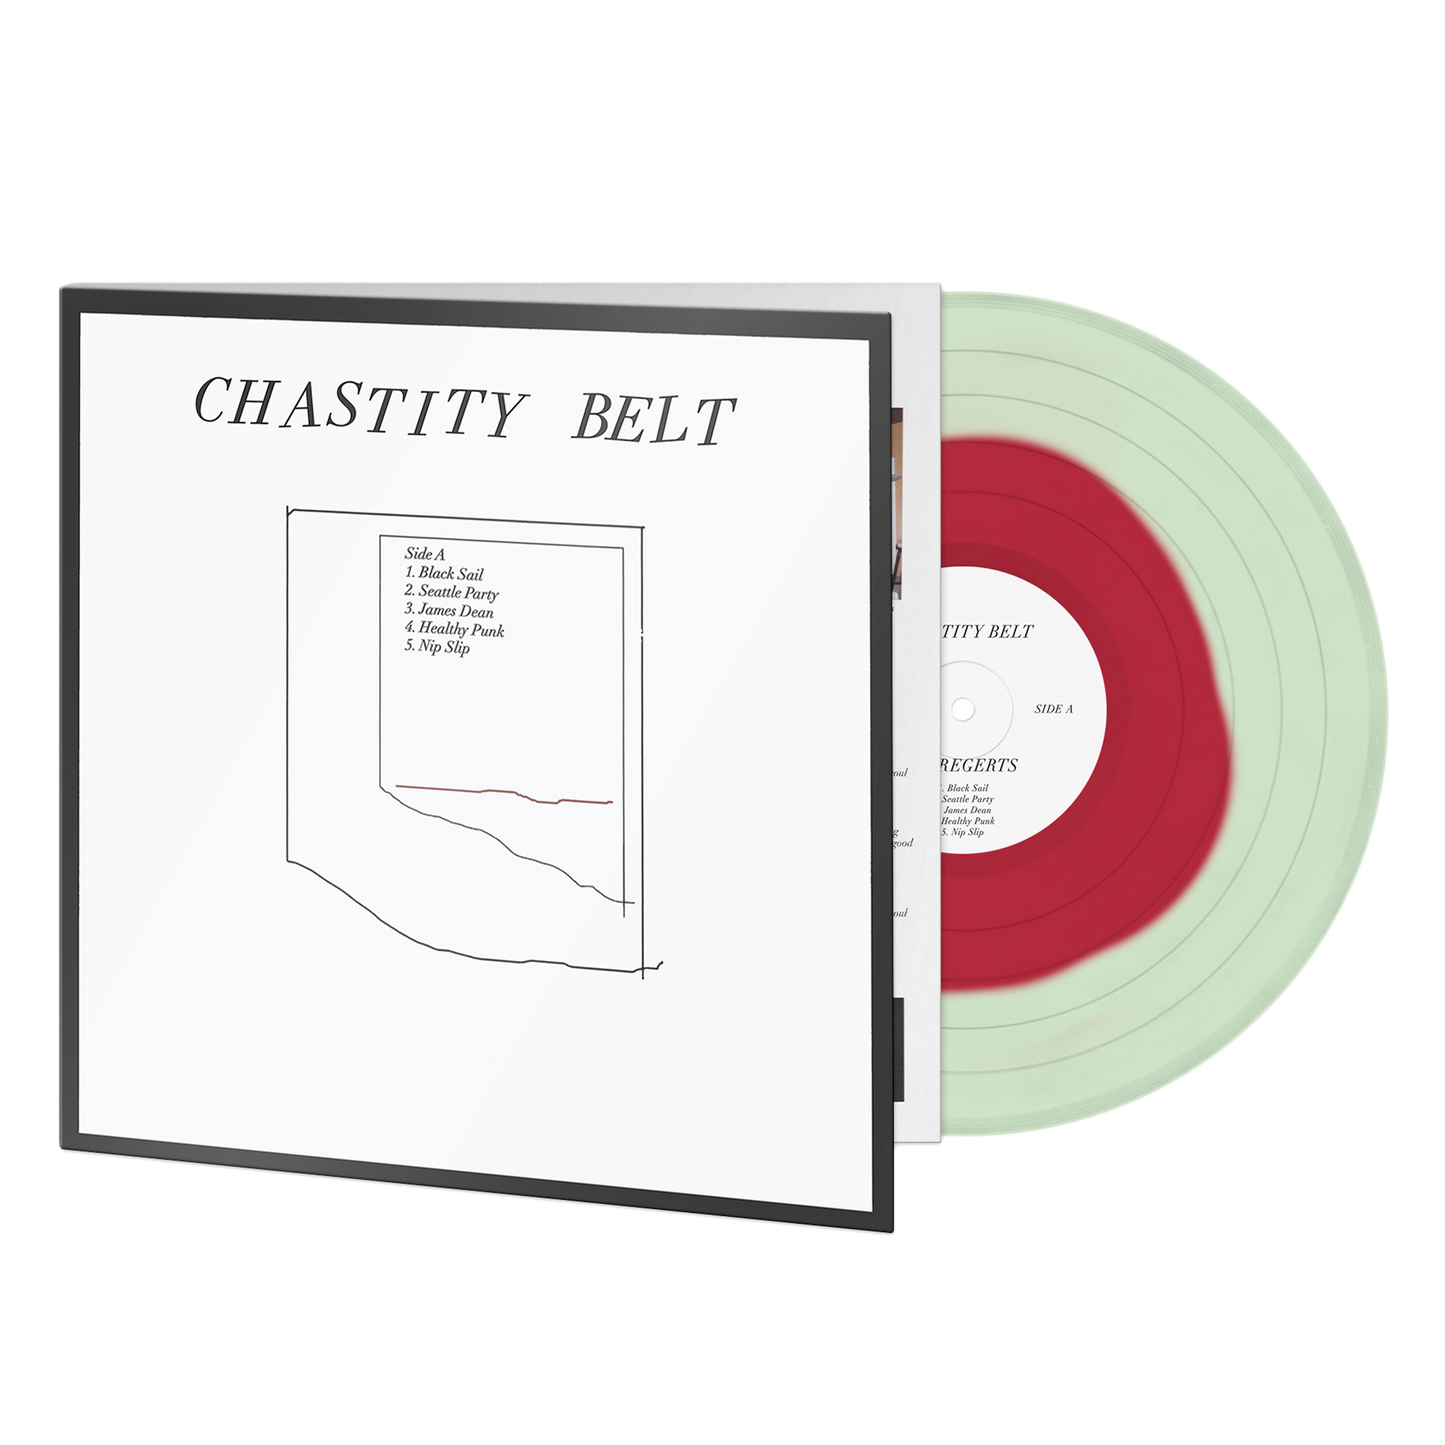 Chastity Belt-LP